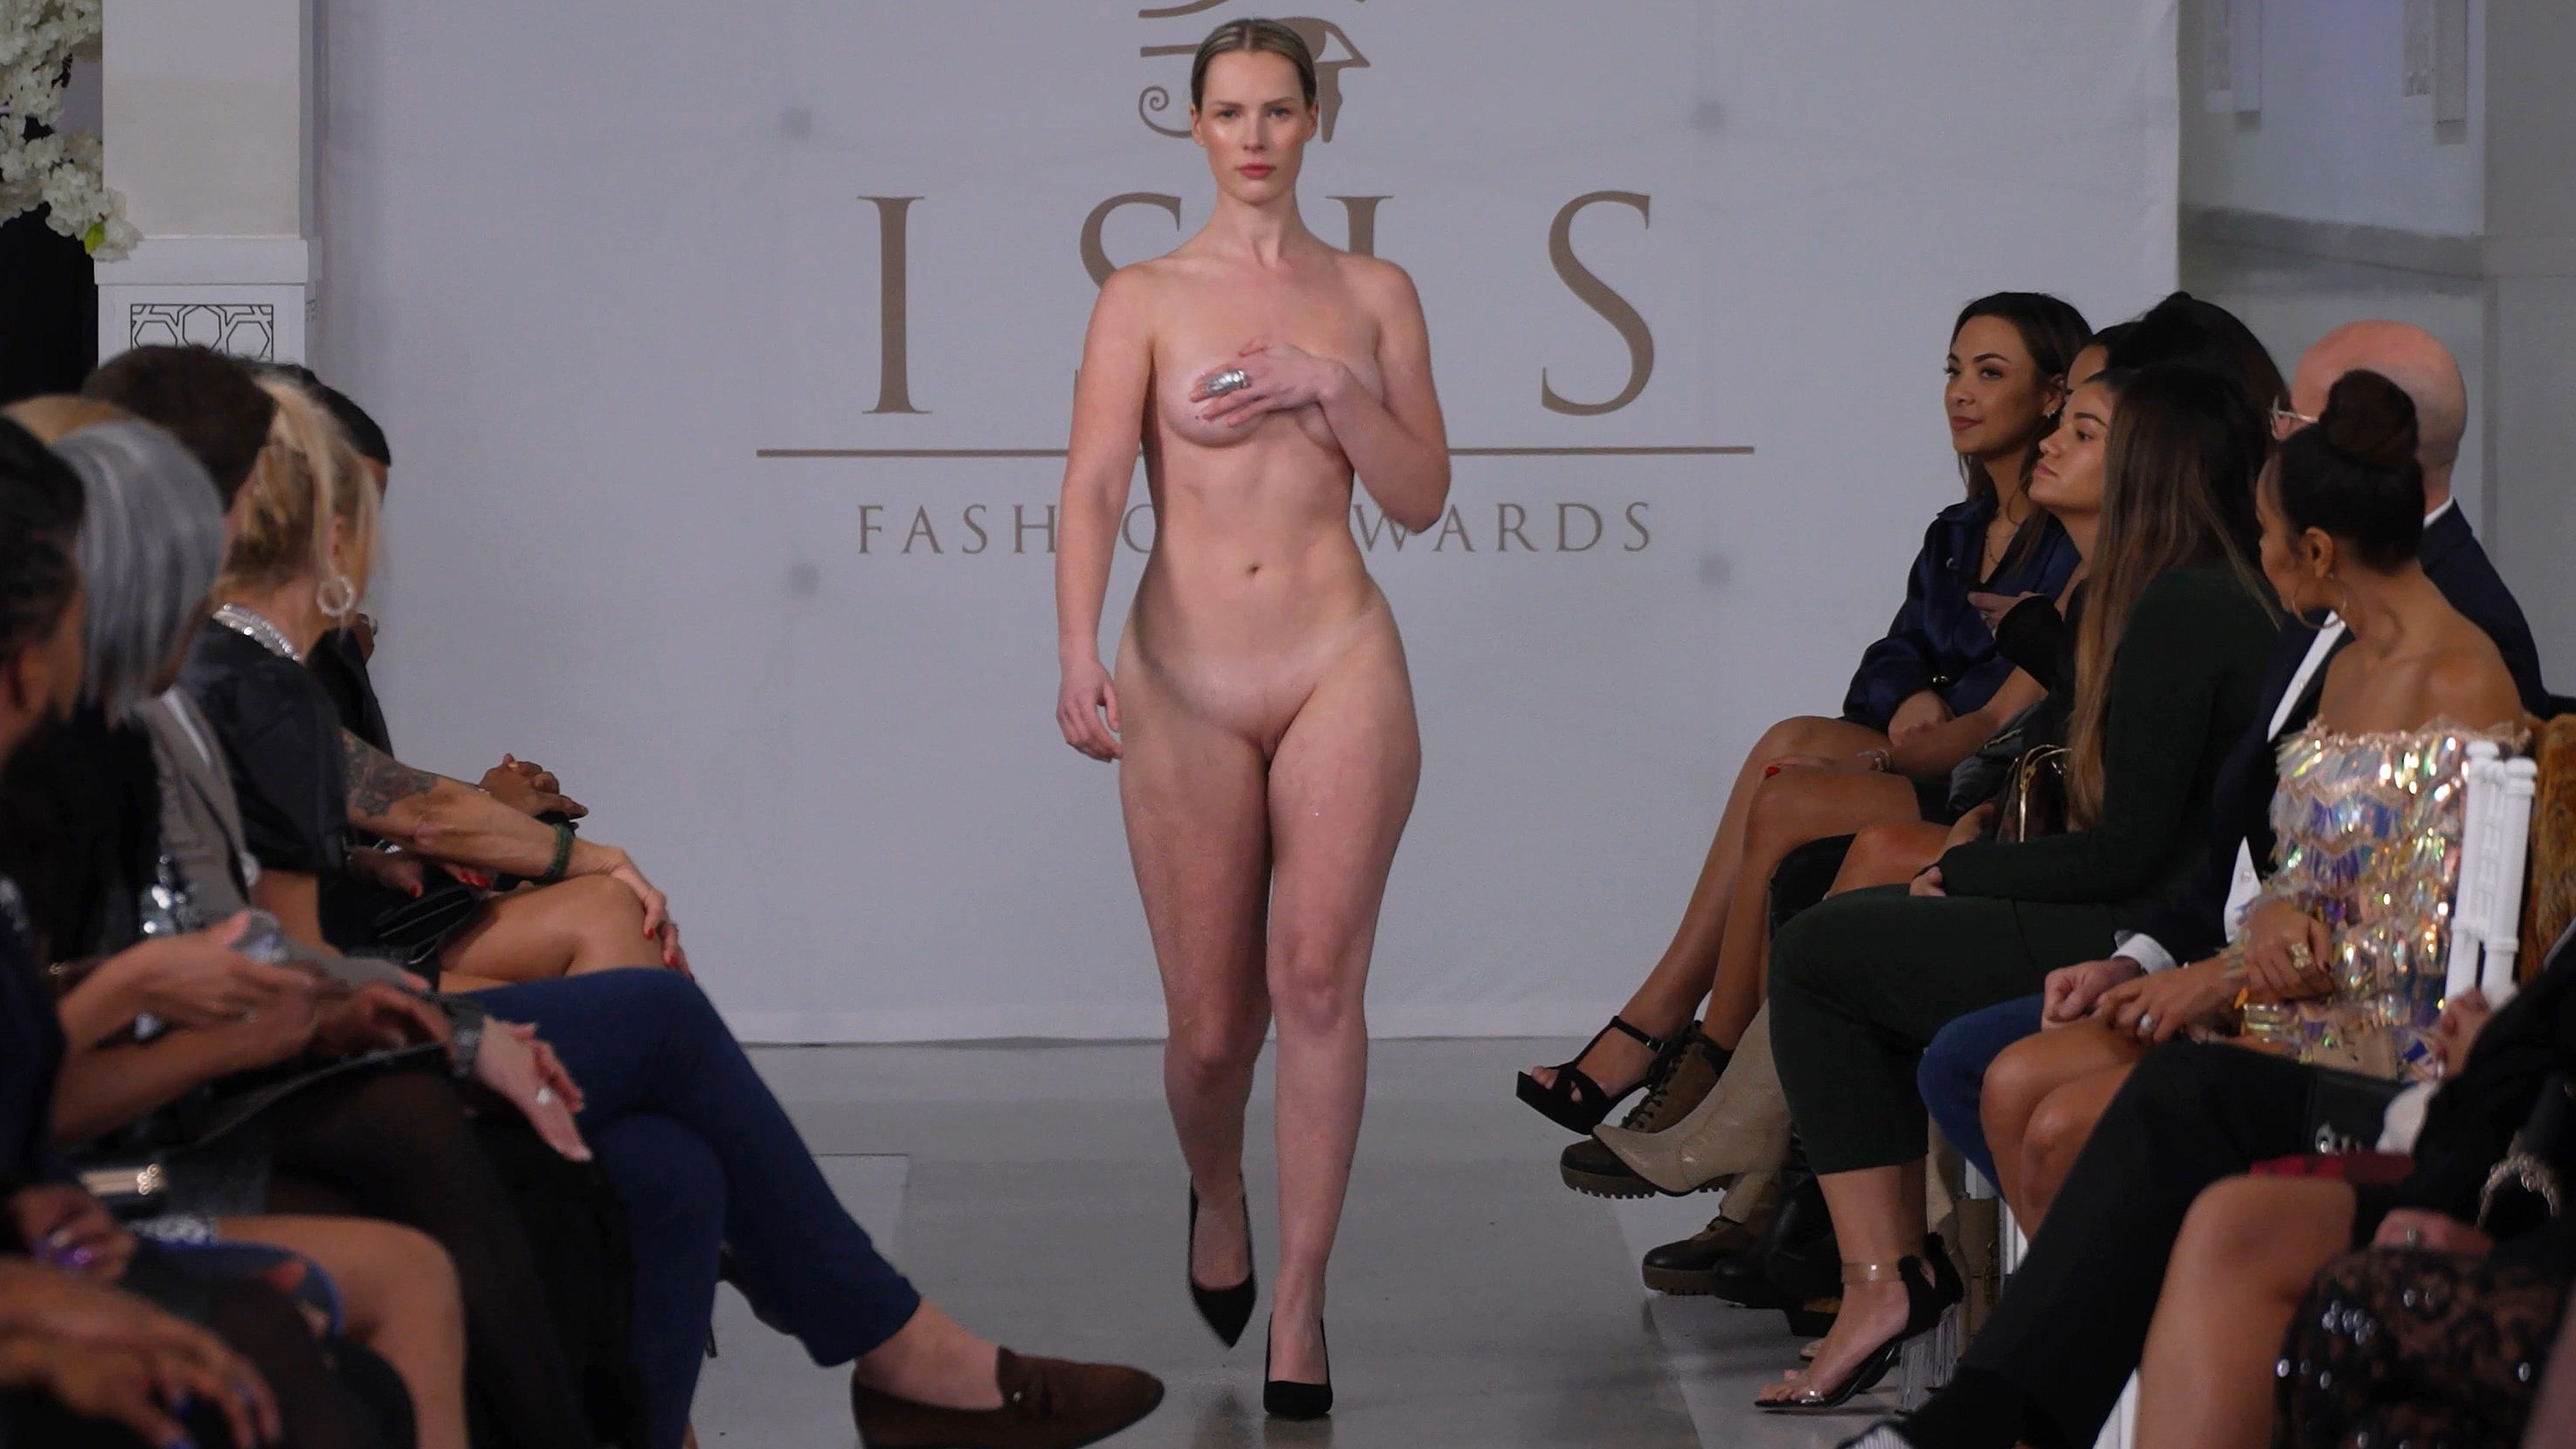 Nude Models Fashion Show - Isis Fashion Awards - TV - ThisVid.com